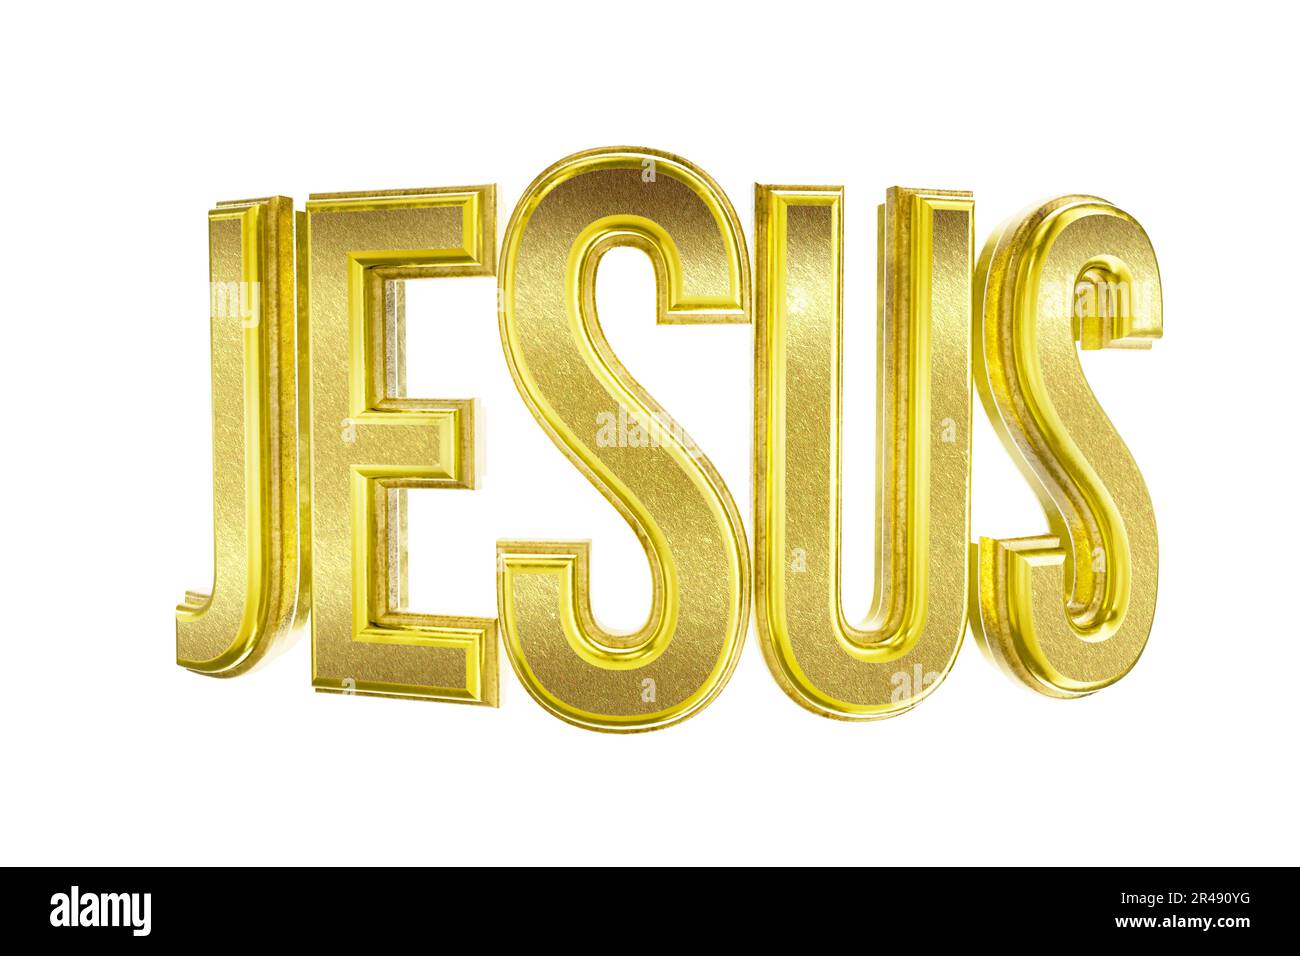 Word Jesus written in gold in a 3d render Stock Photo - Alamy